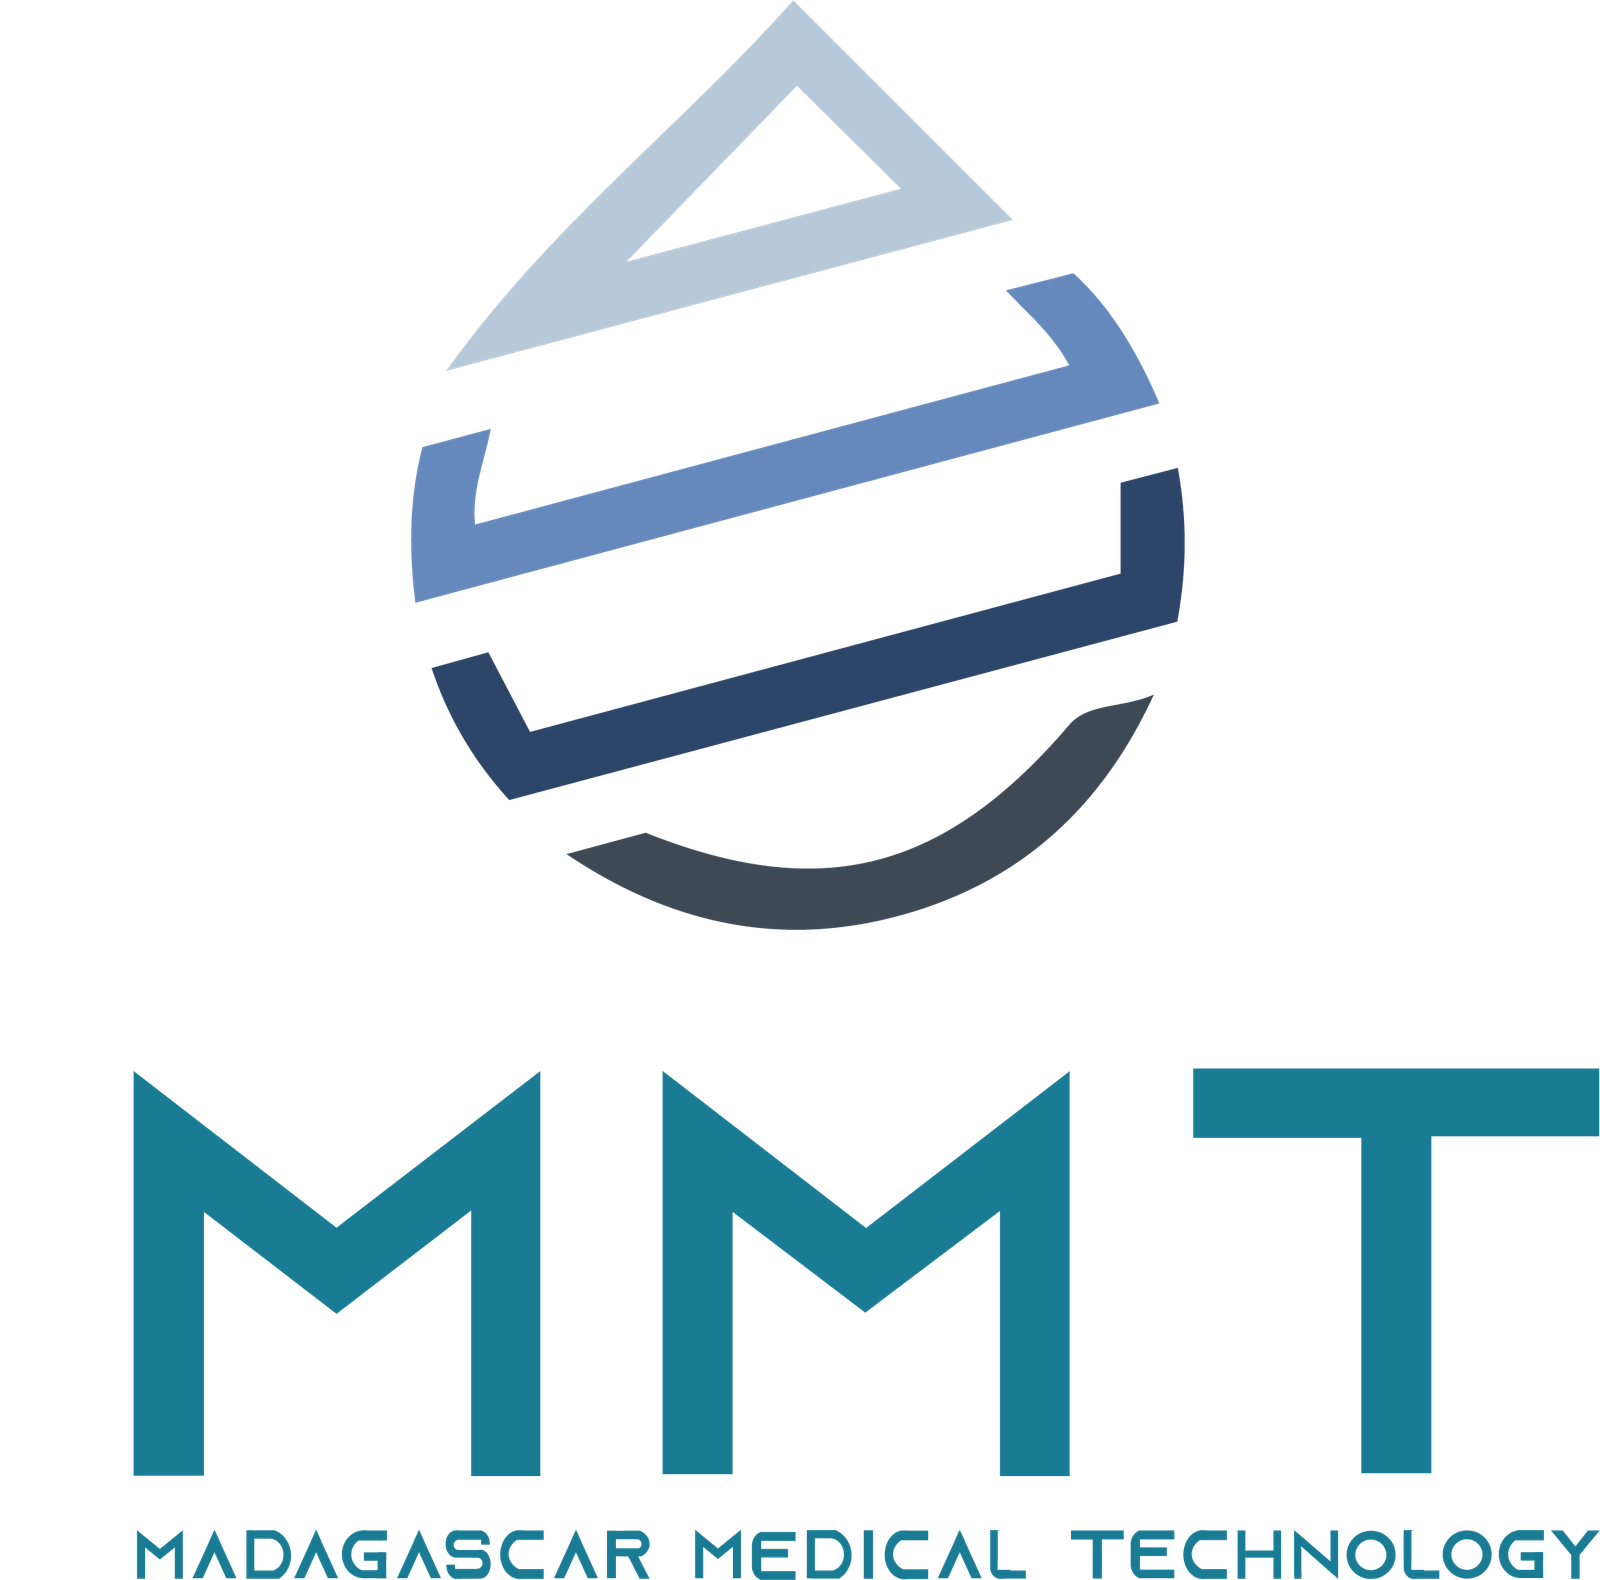 MADAGASCAR MEDICAL TECHNOLOGY